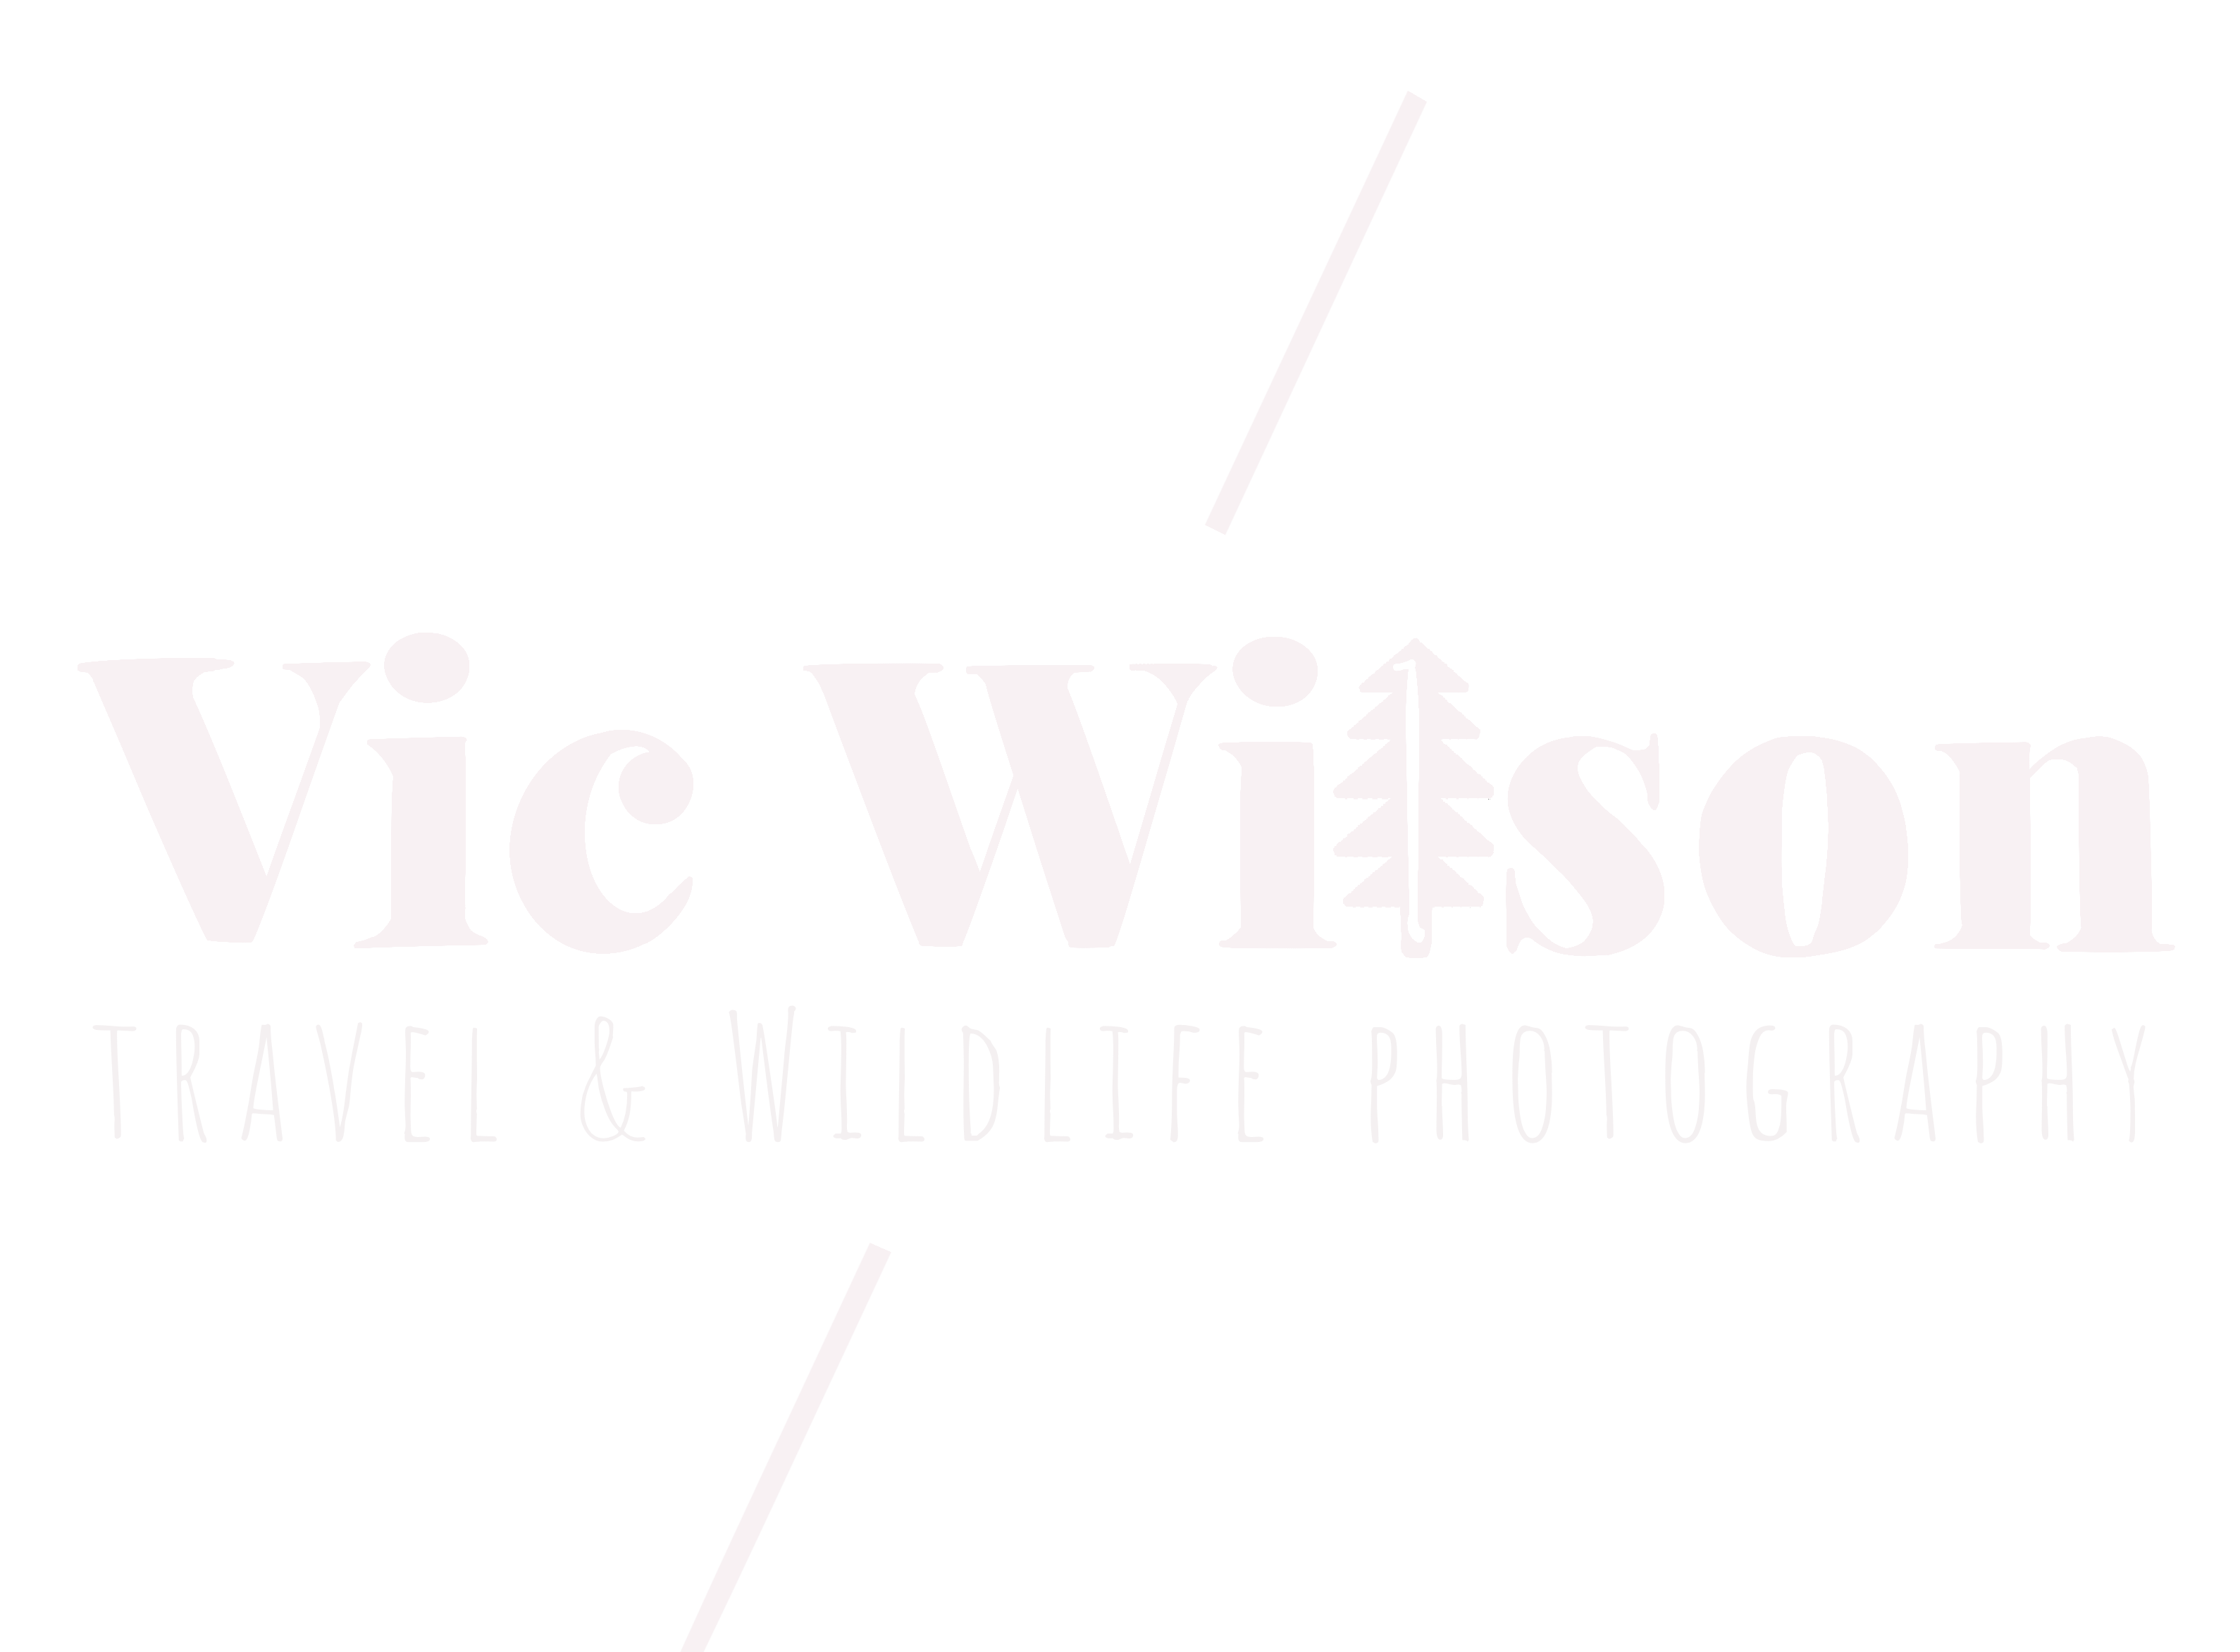 Victoria Wilson